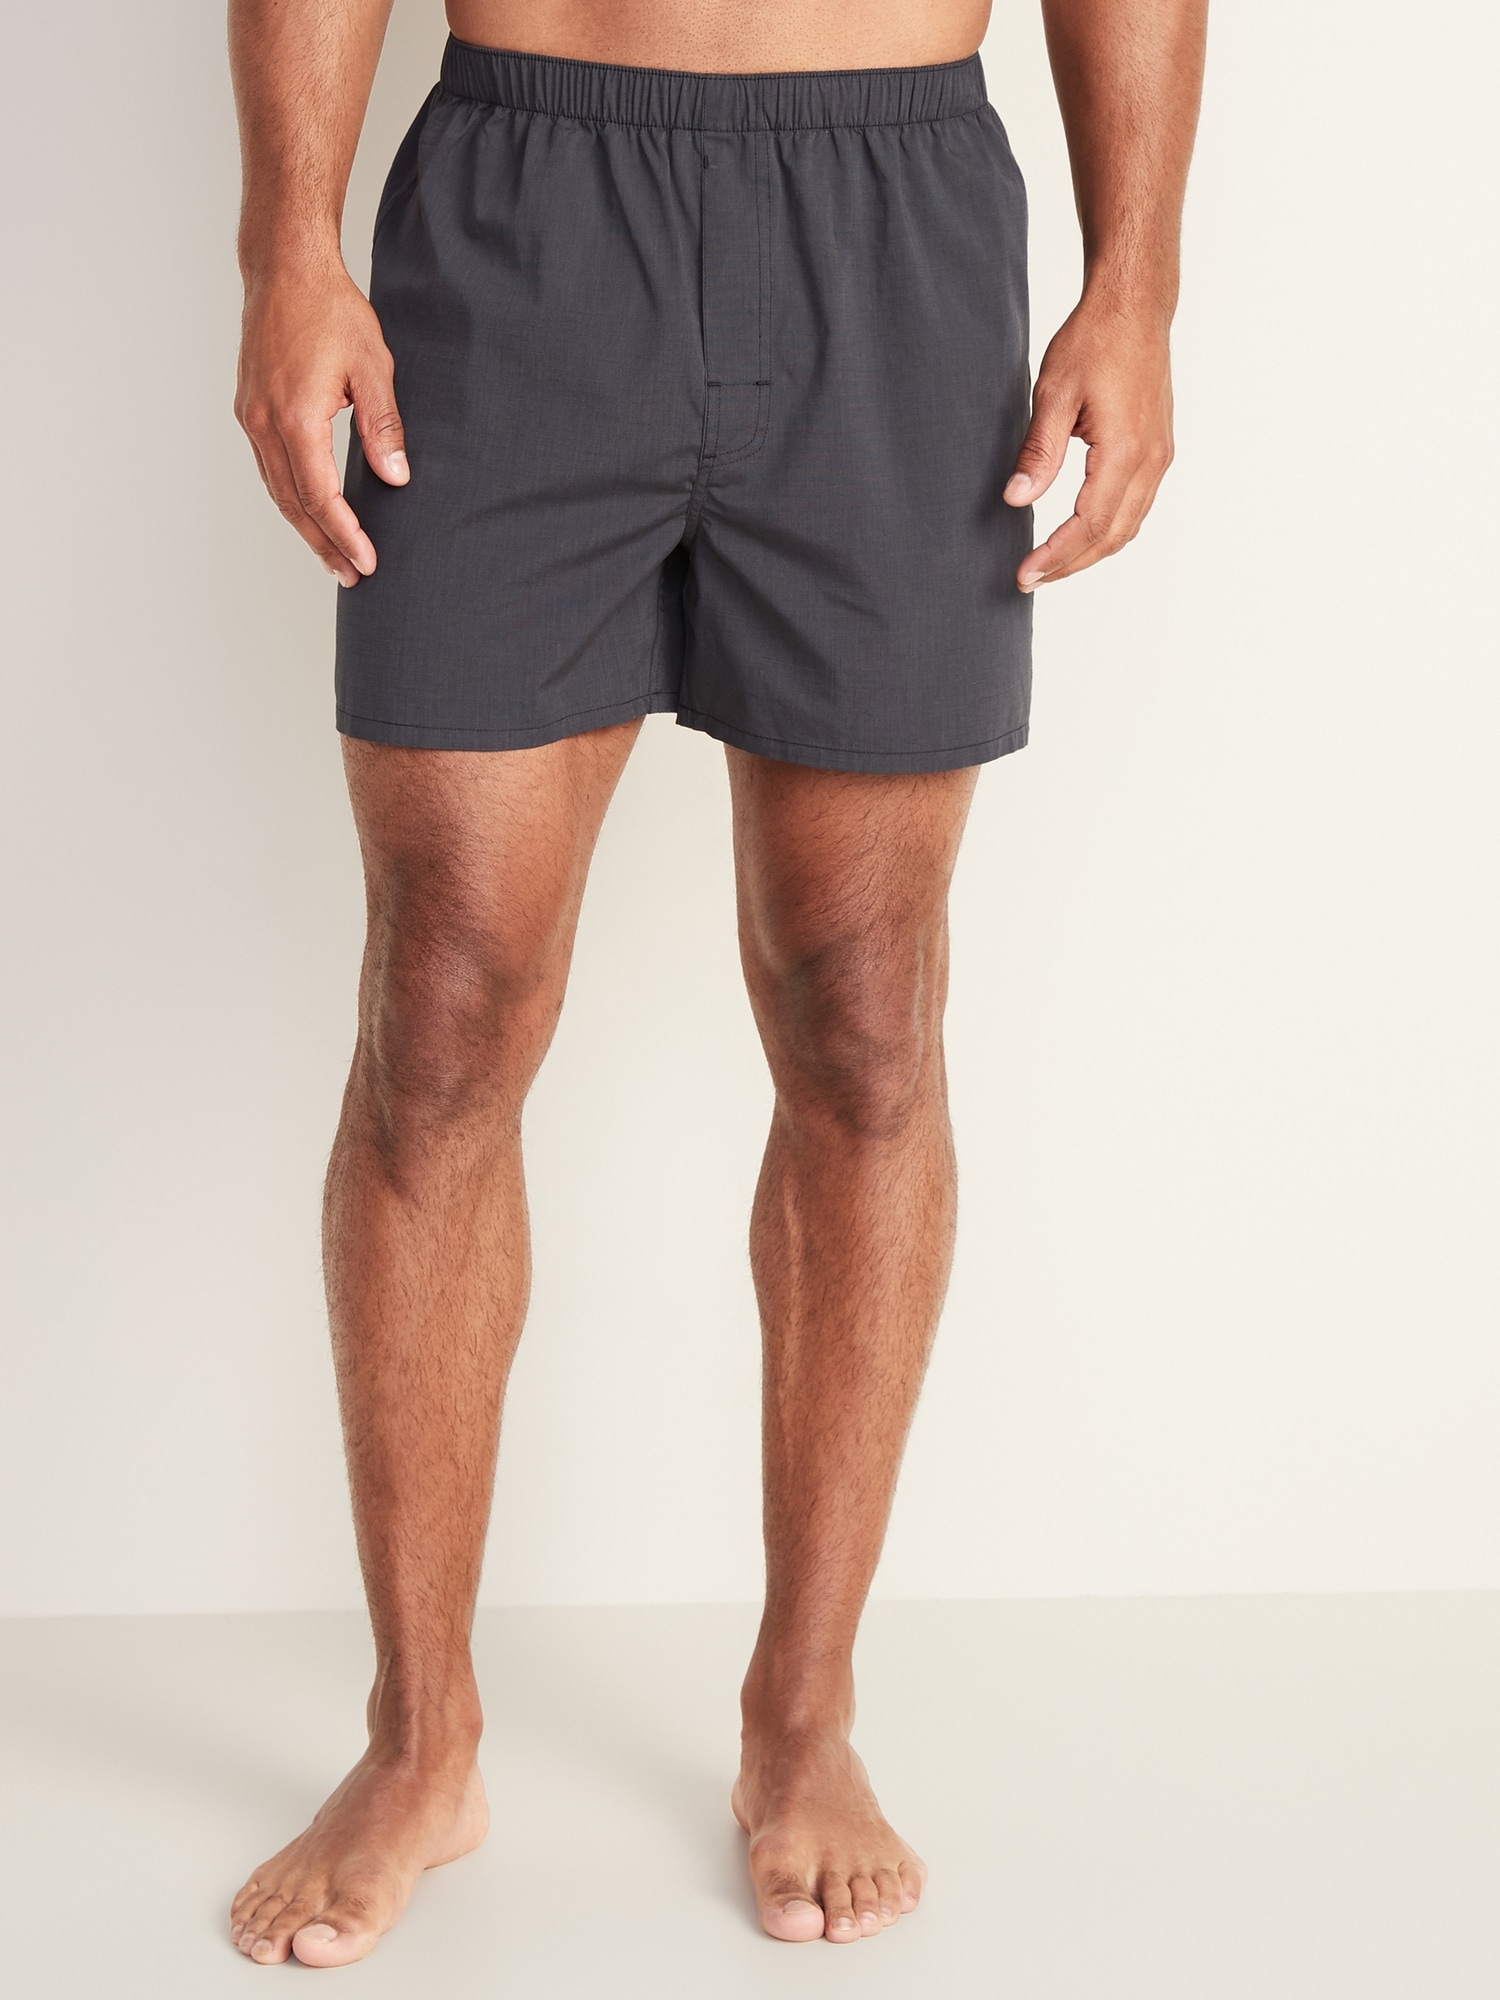 Soft-Washed Printed Boxer Shorts for Men